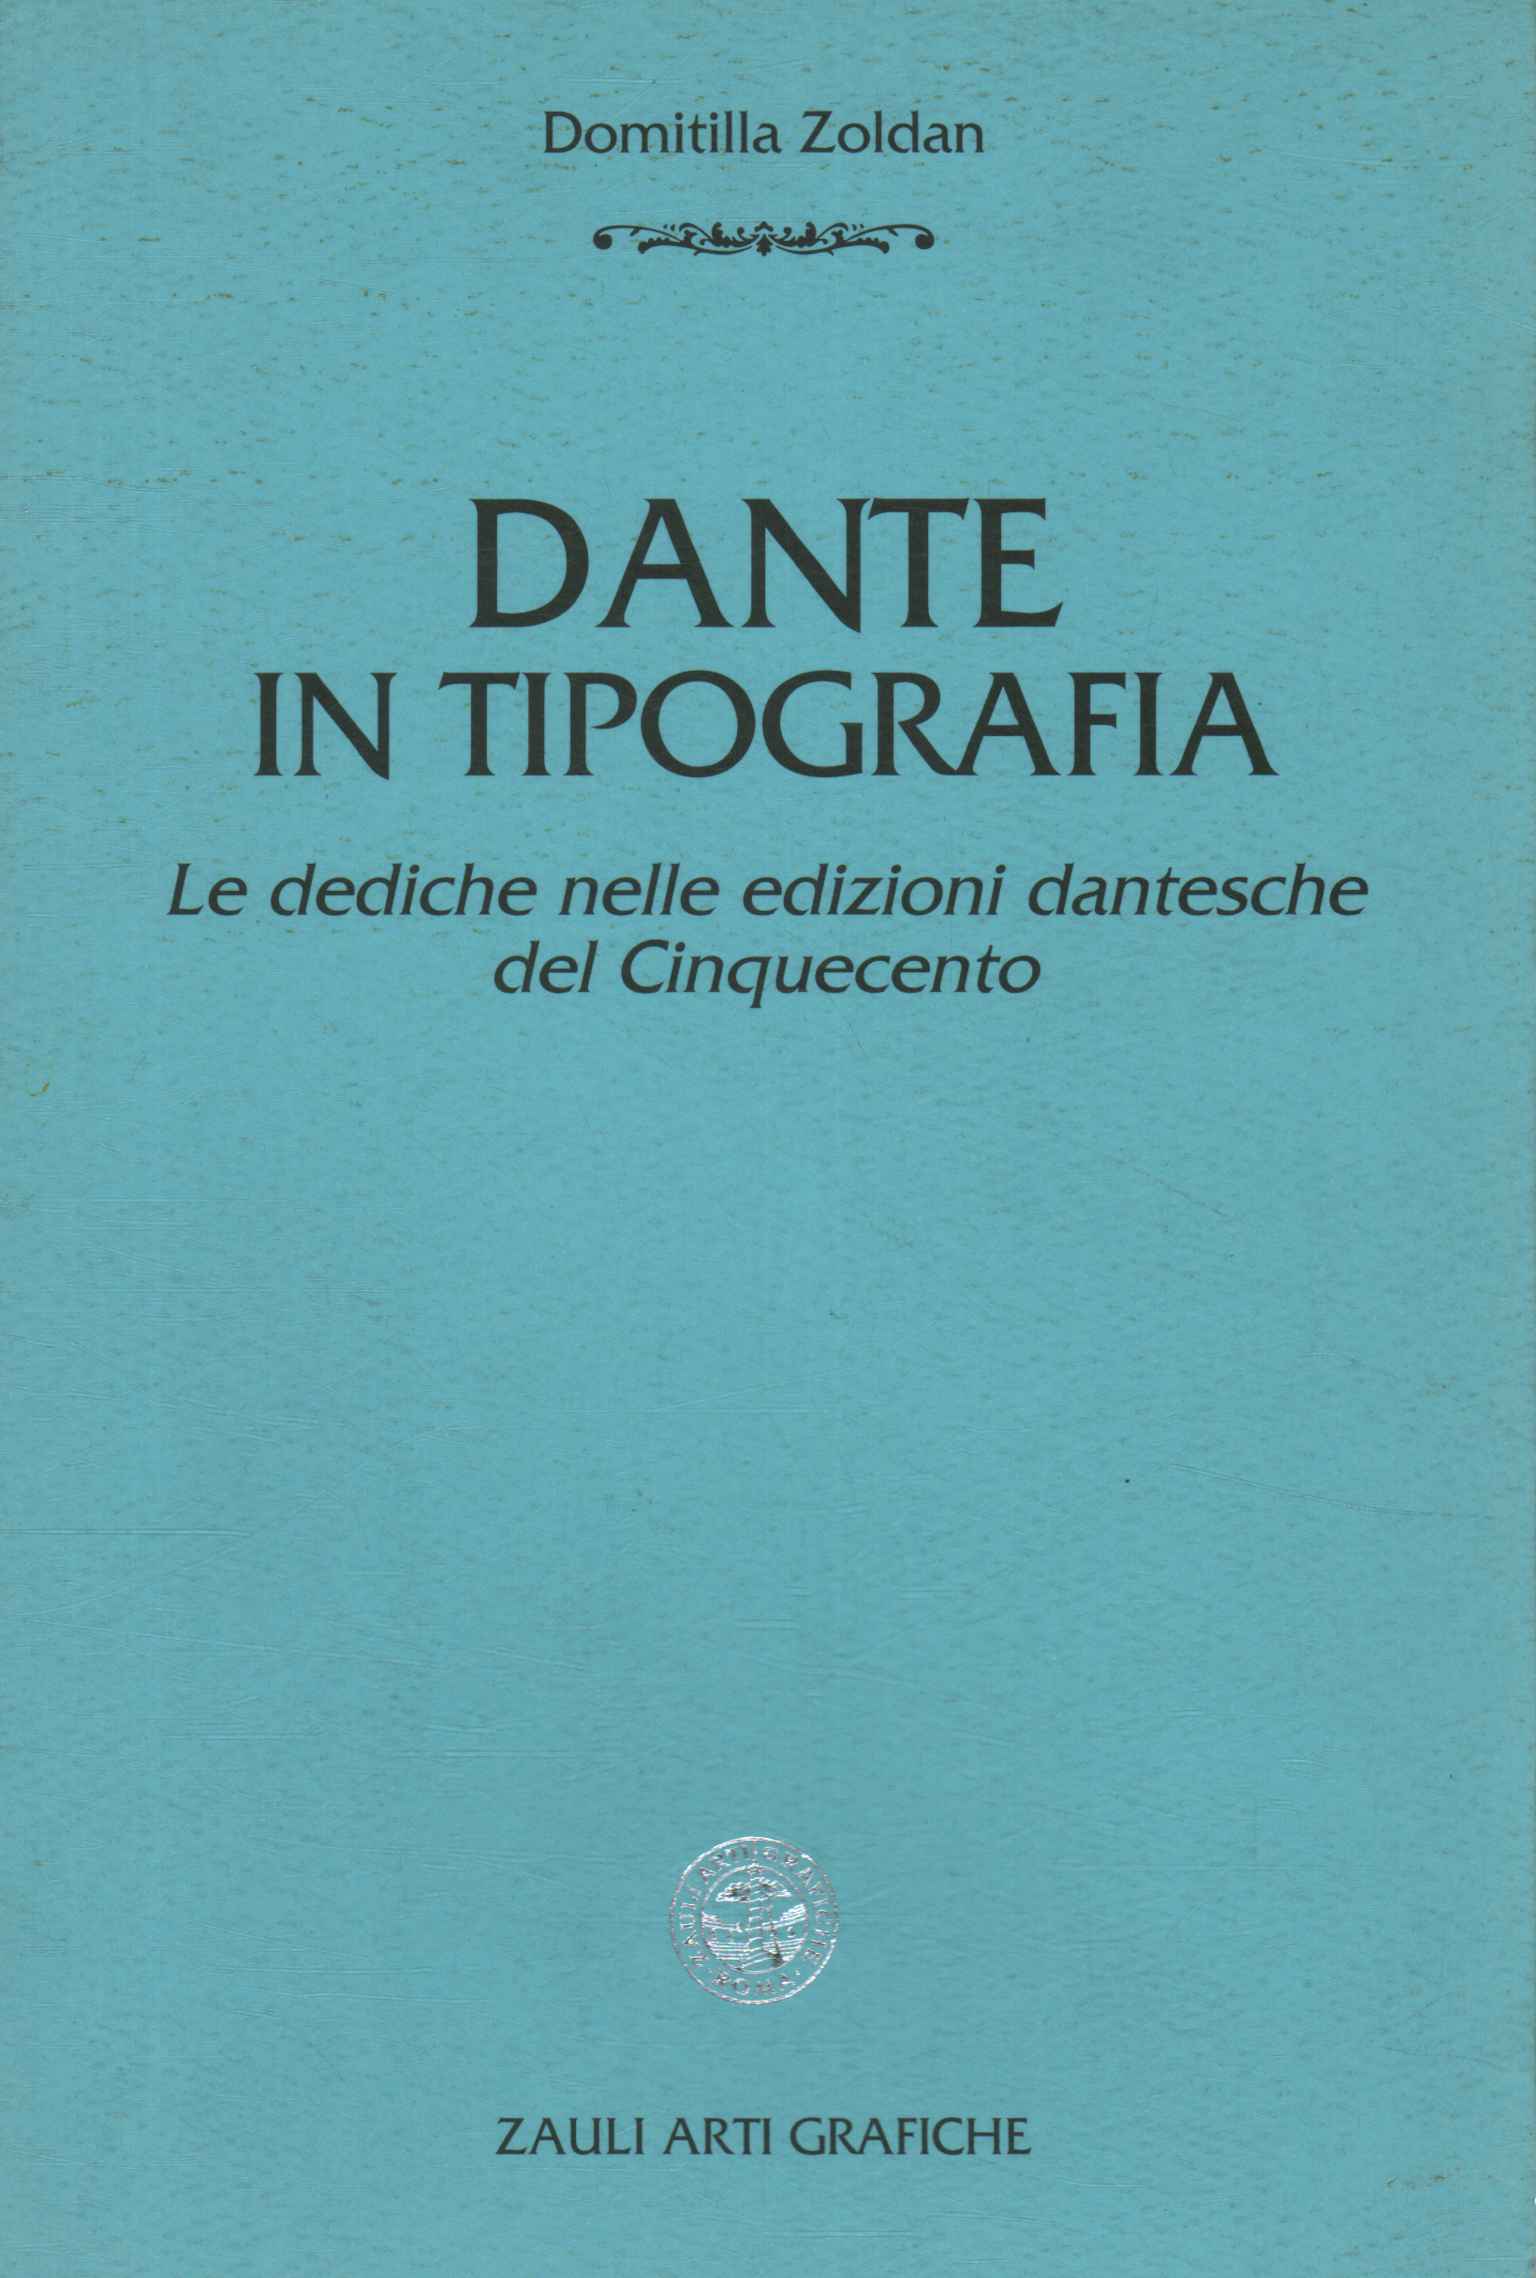 Dante in tipografia